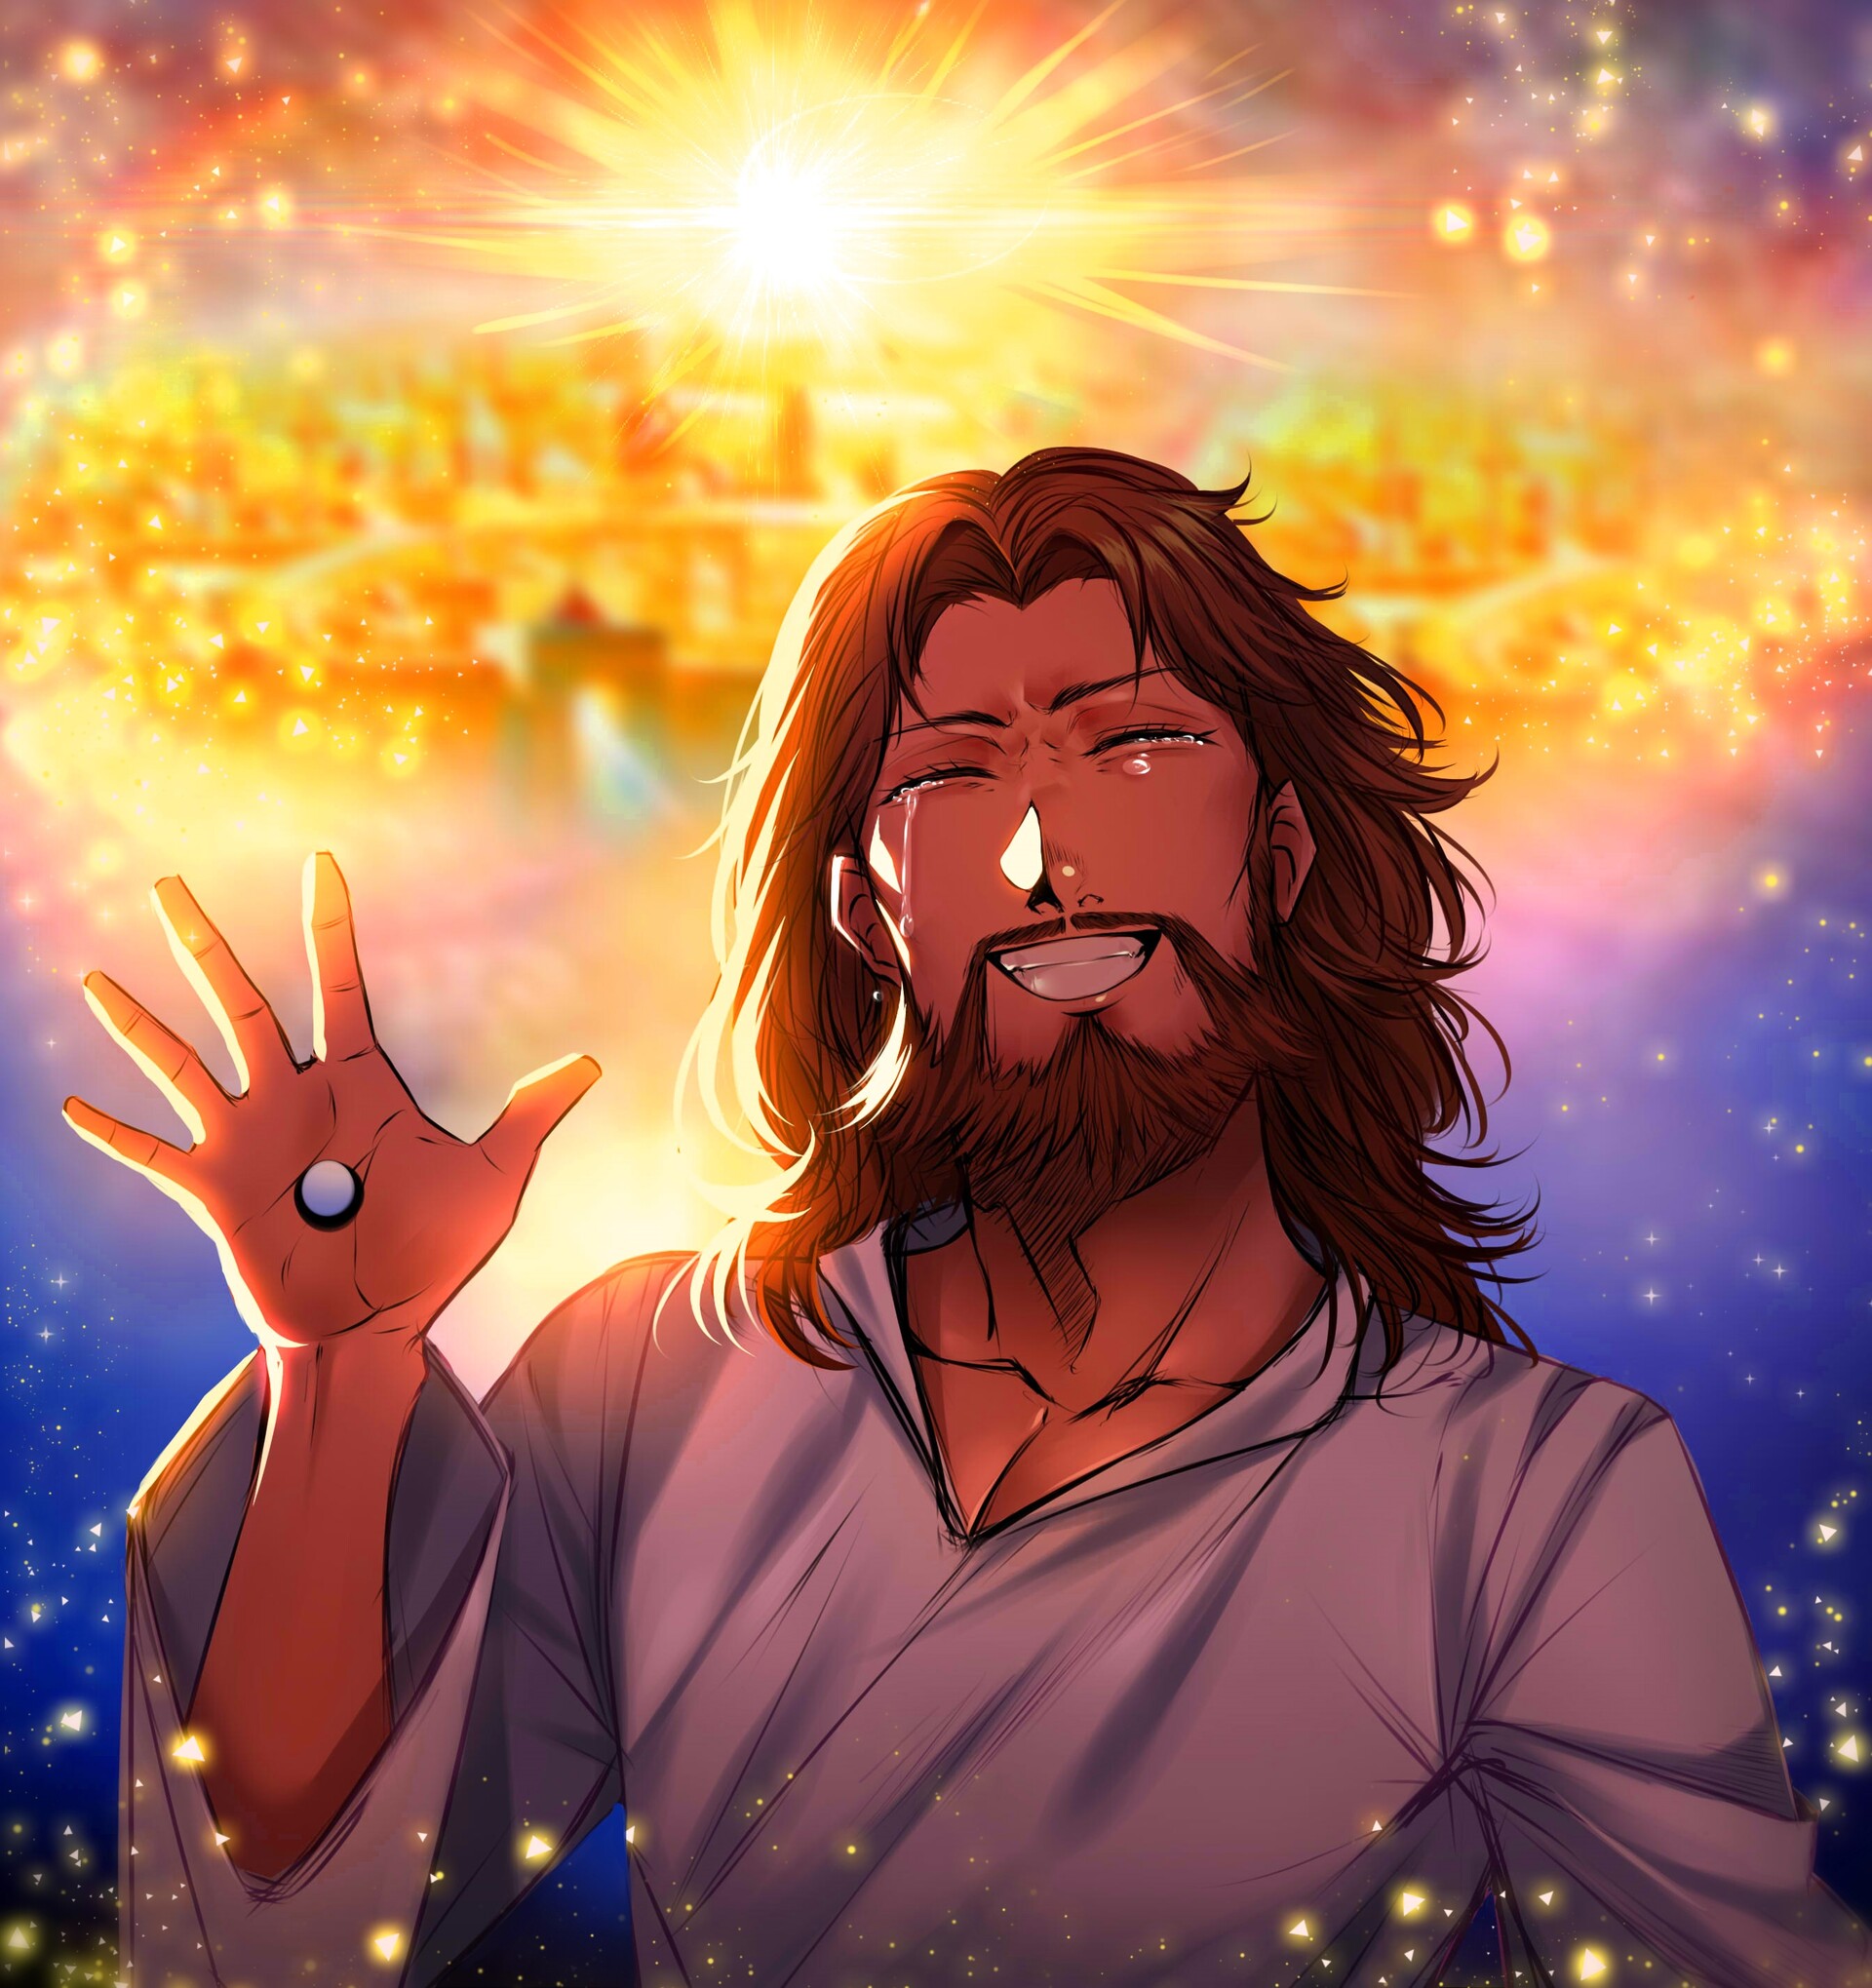 Jesus as an anime girl  rweirddalle